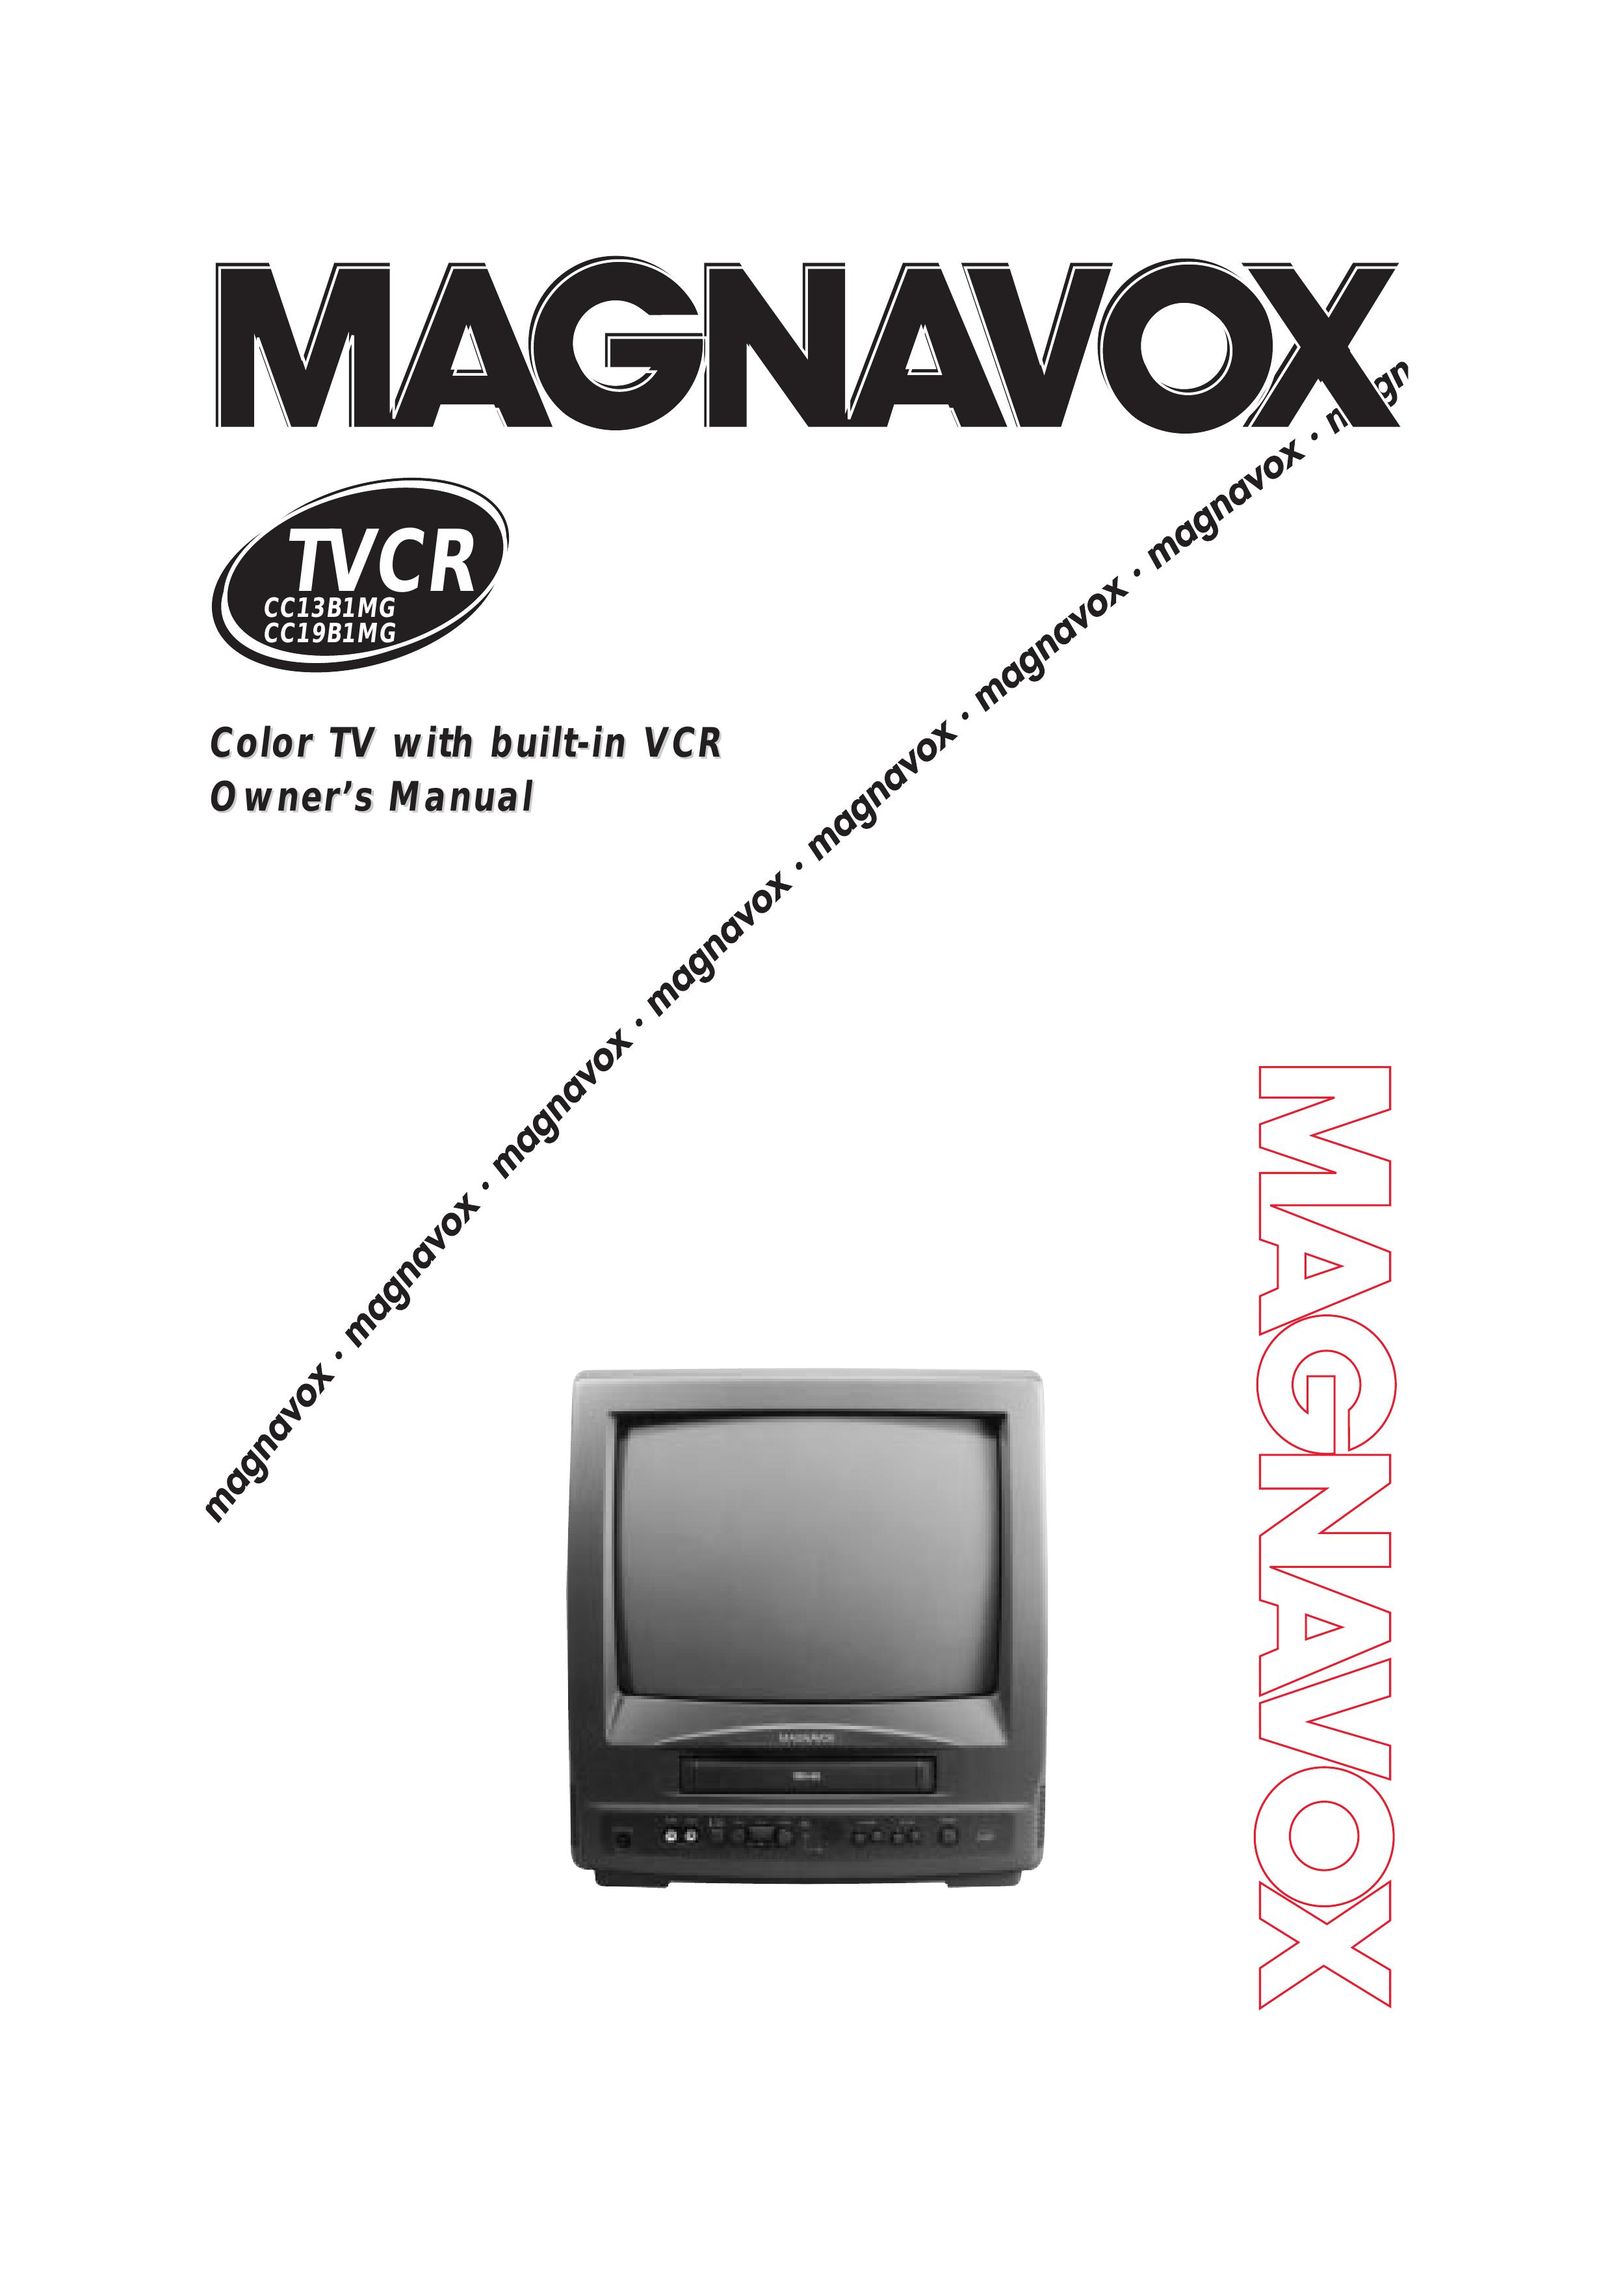 Magnavox CC19B1MG TV VCR Combo User Manual